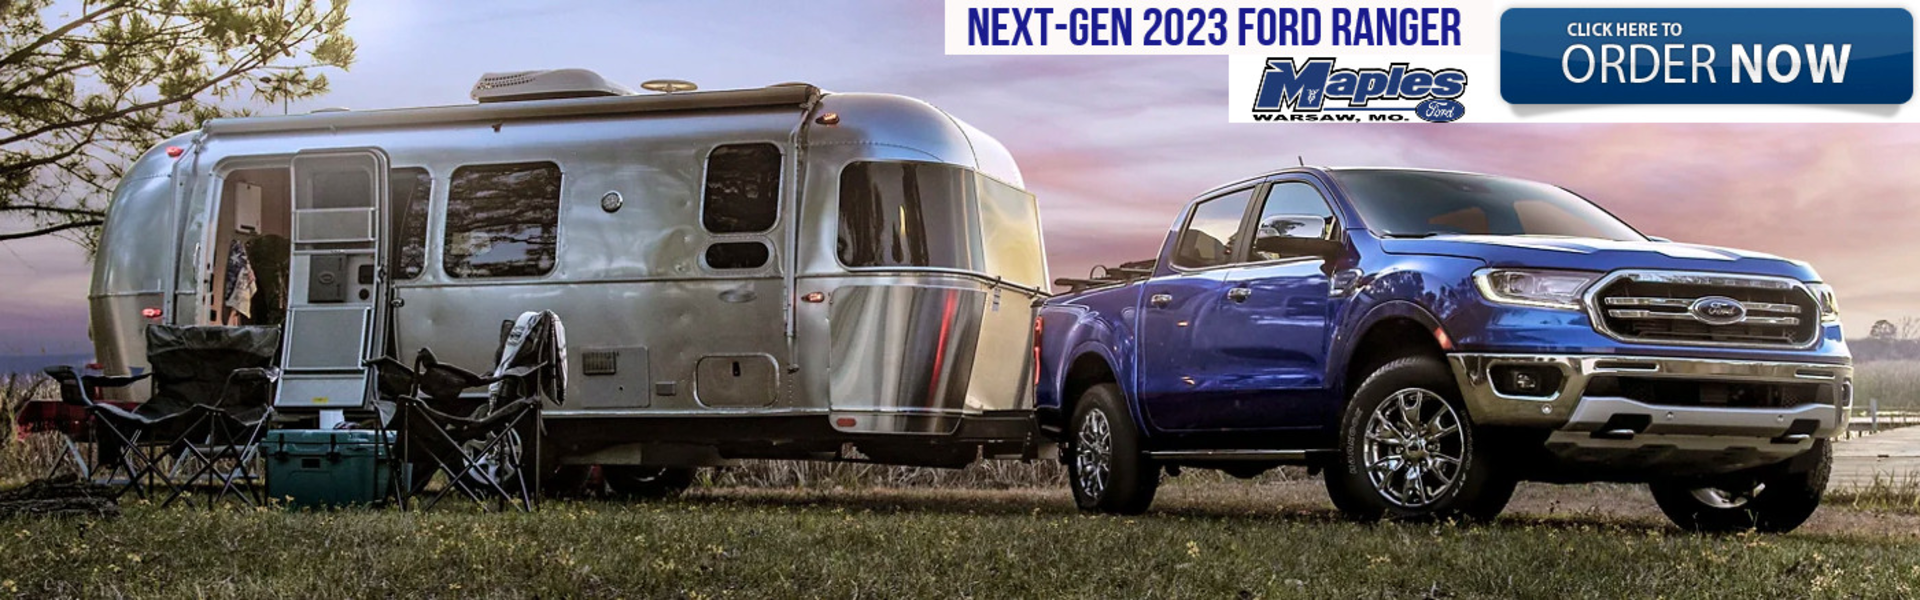 Next-Gen 2023 Ford Ranger